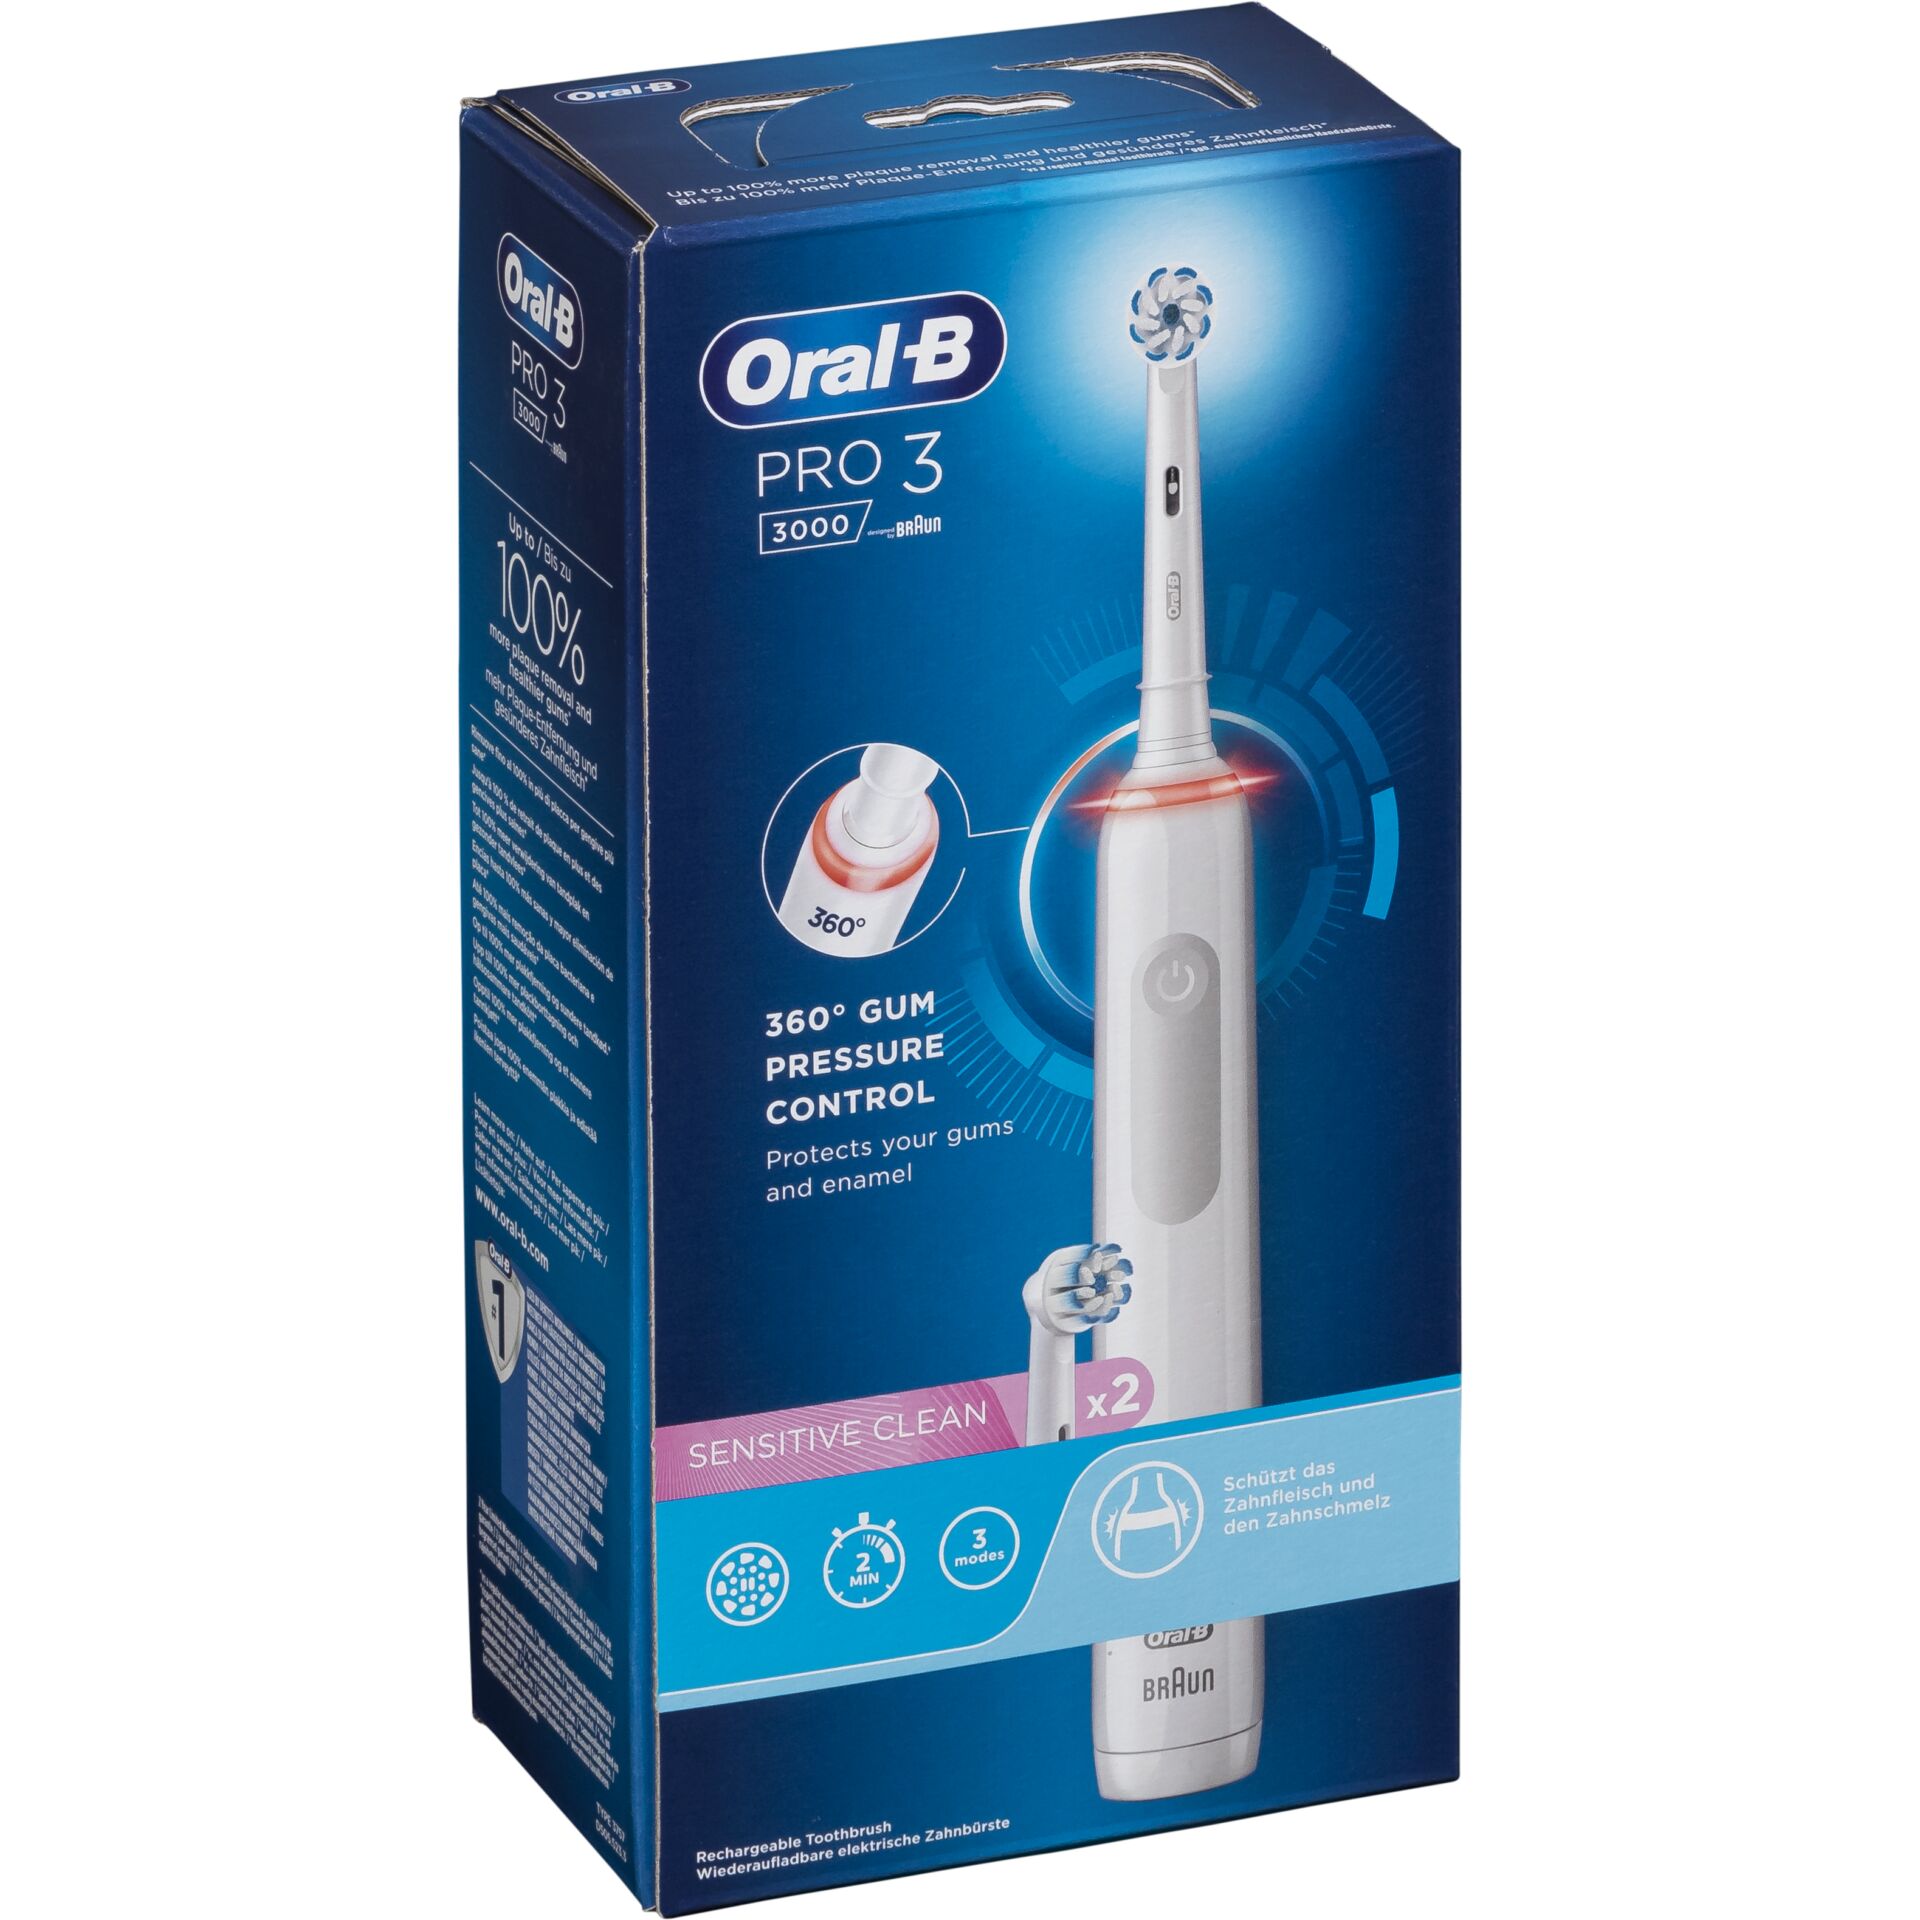 Oral-B PRO 3 3000 Sensitive Clean bianco JAS22